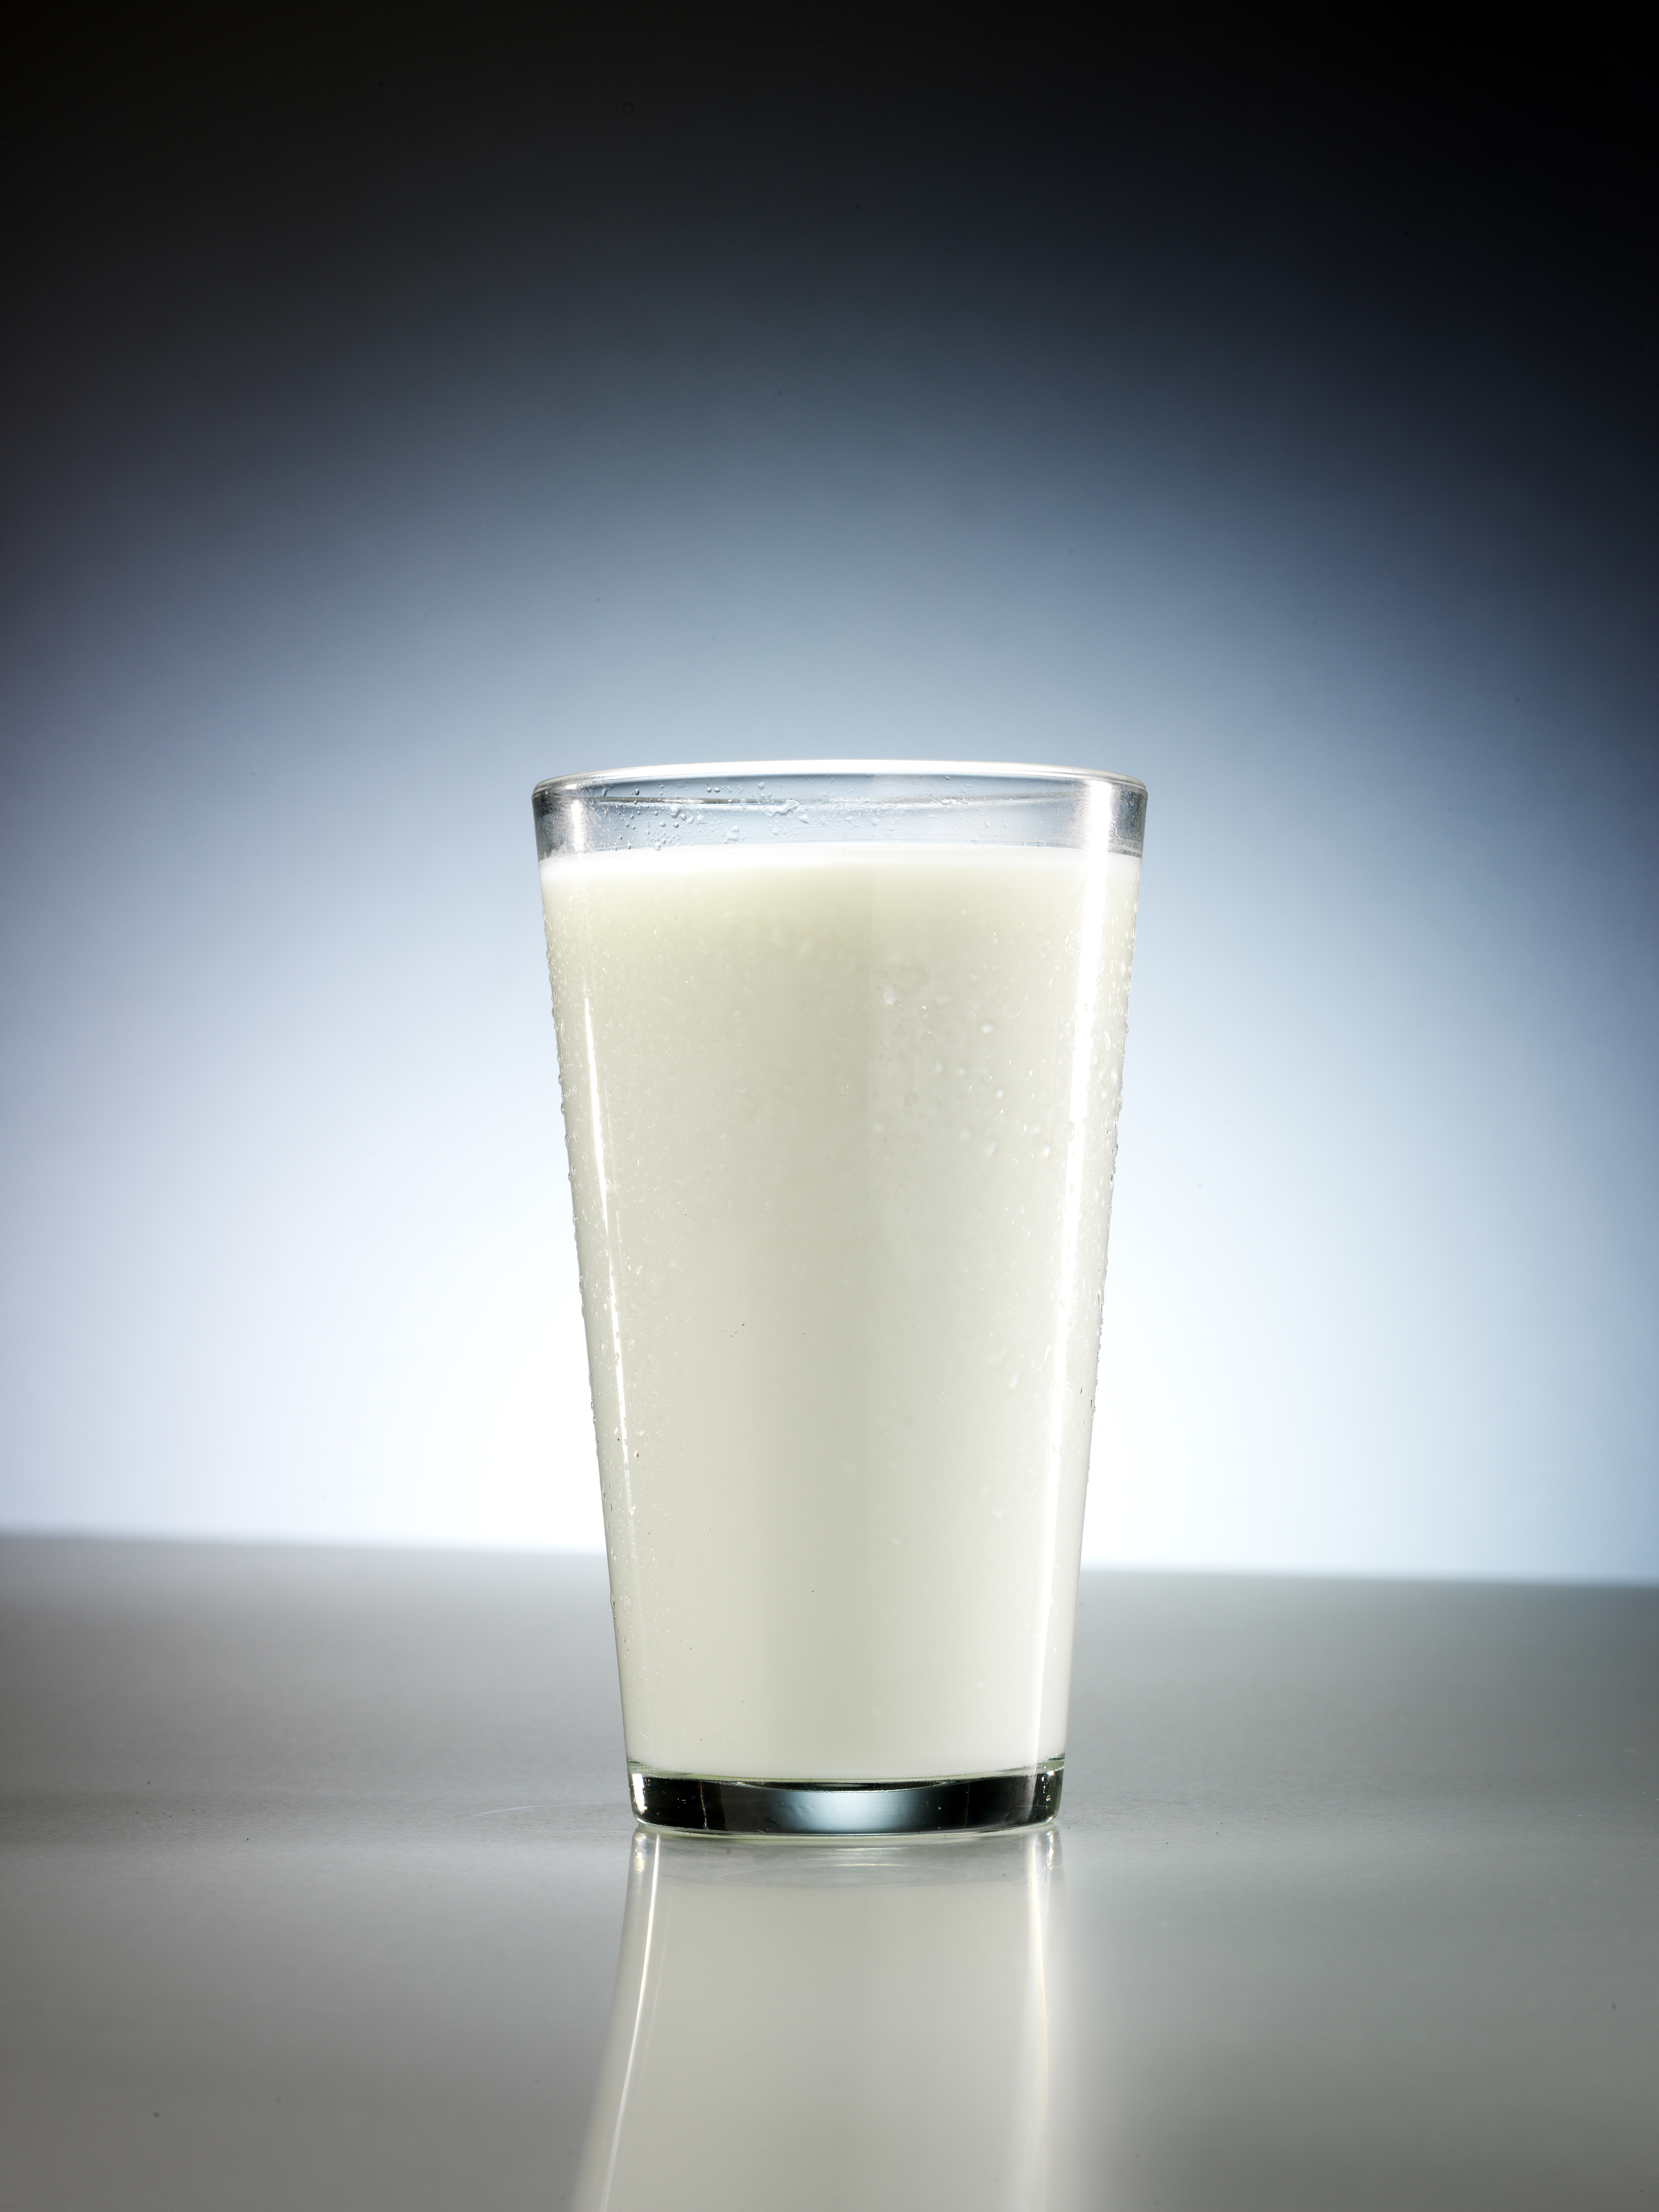 Silk soy milk is going carrageenan-free (www.davebradleyphoto.com&mdash;Dave Bradley Photography)